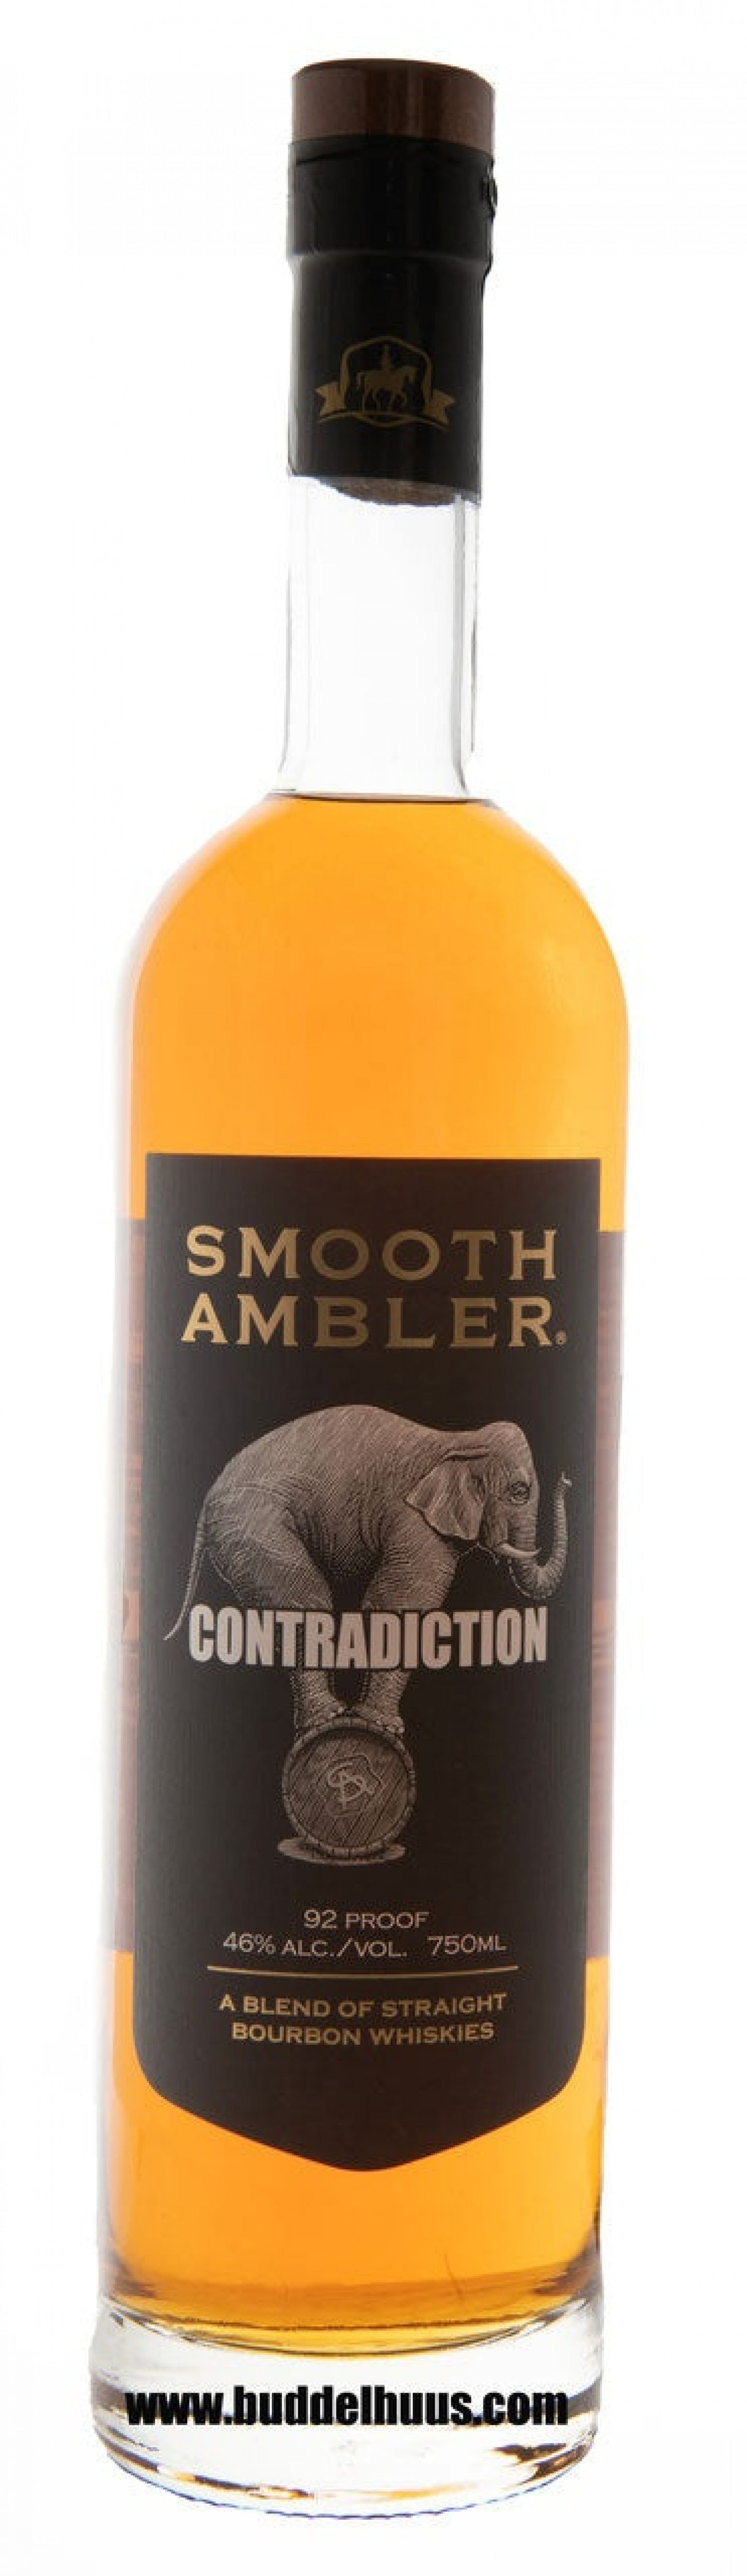 Smooth Ambler Contradiction